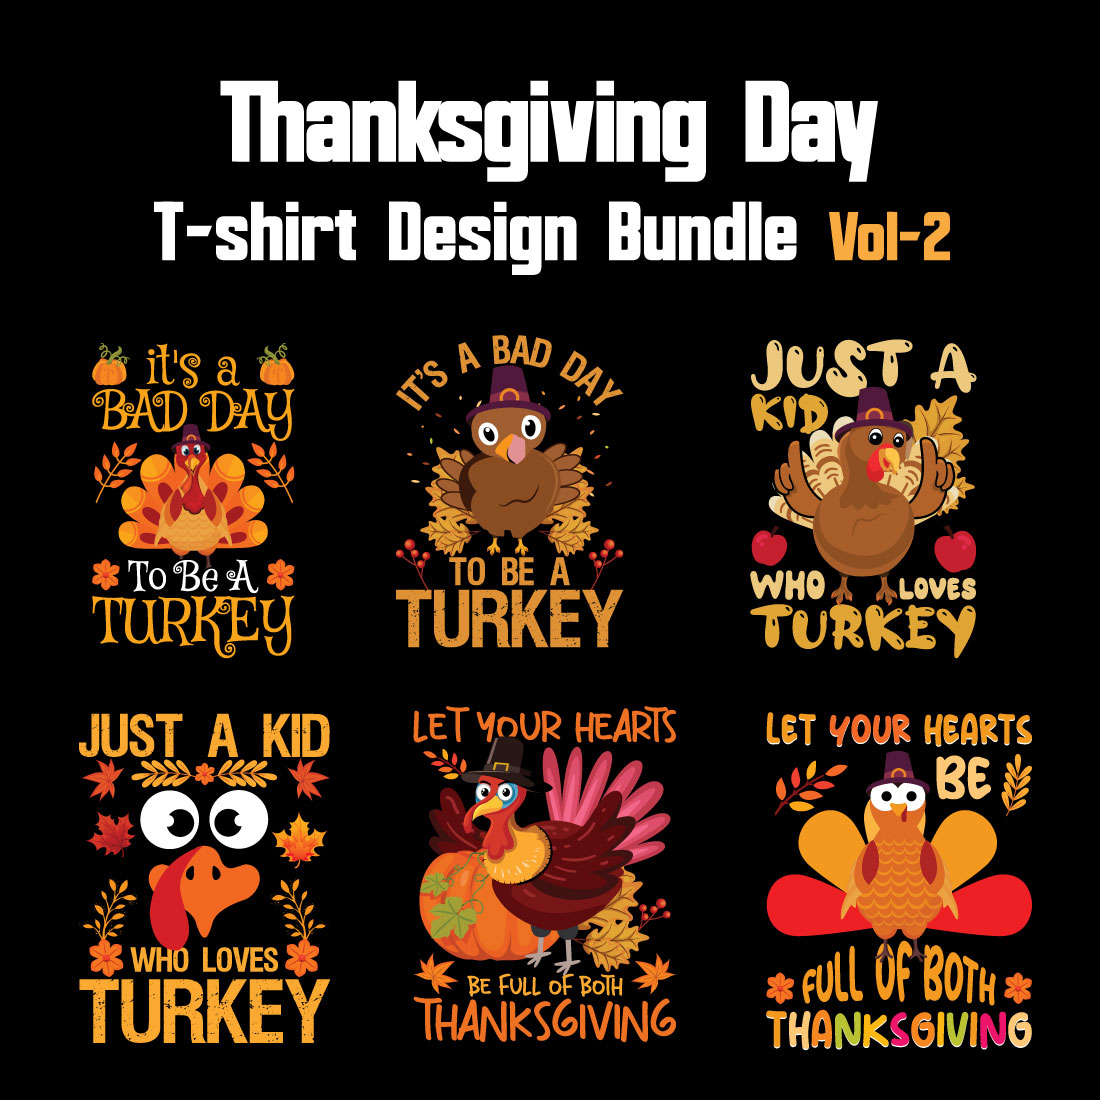 Thanksgiving Day T-shirt Design Bundle Vol-2 cover image.